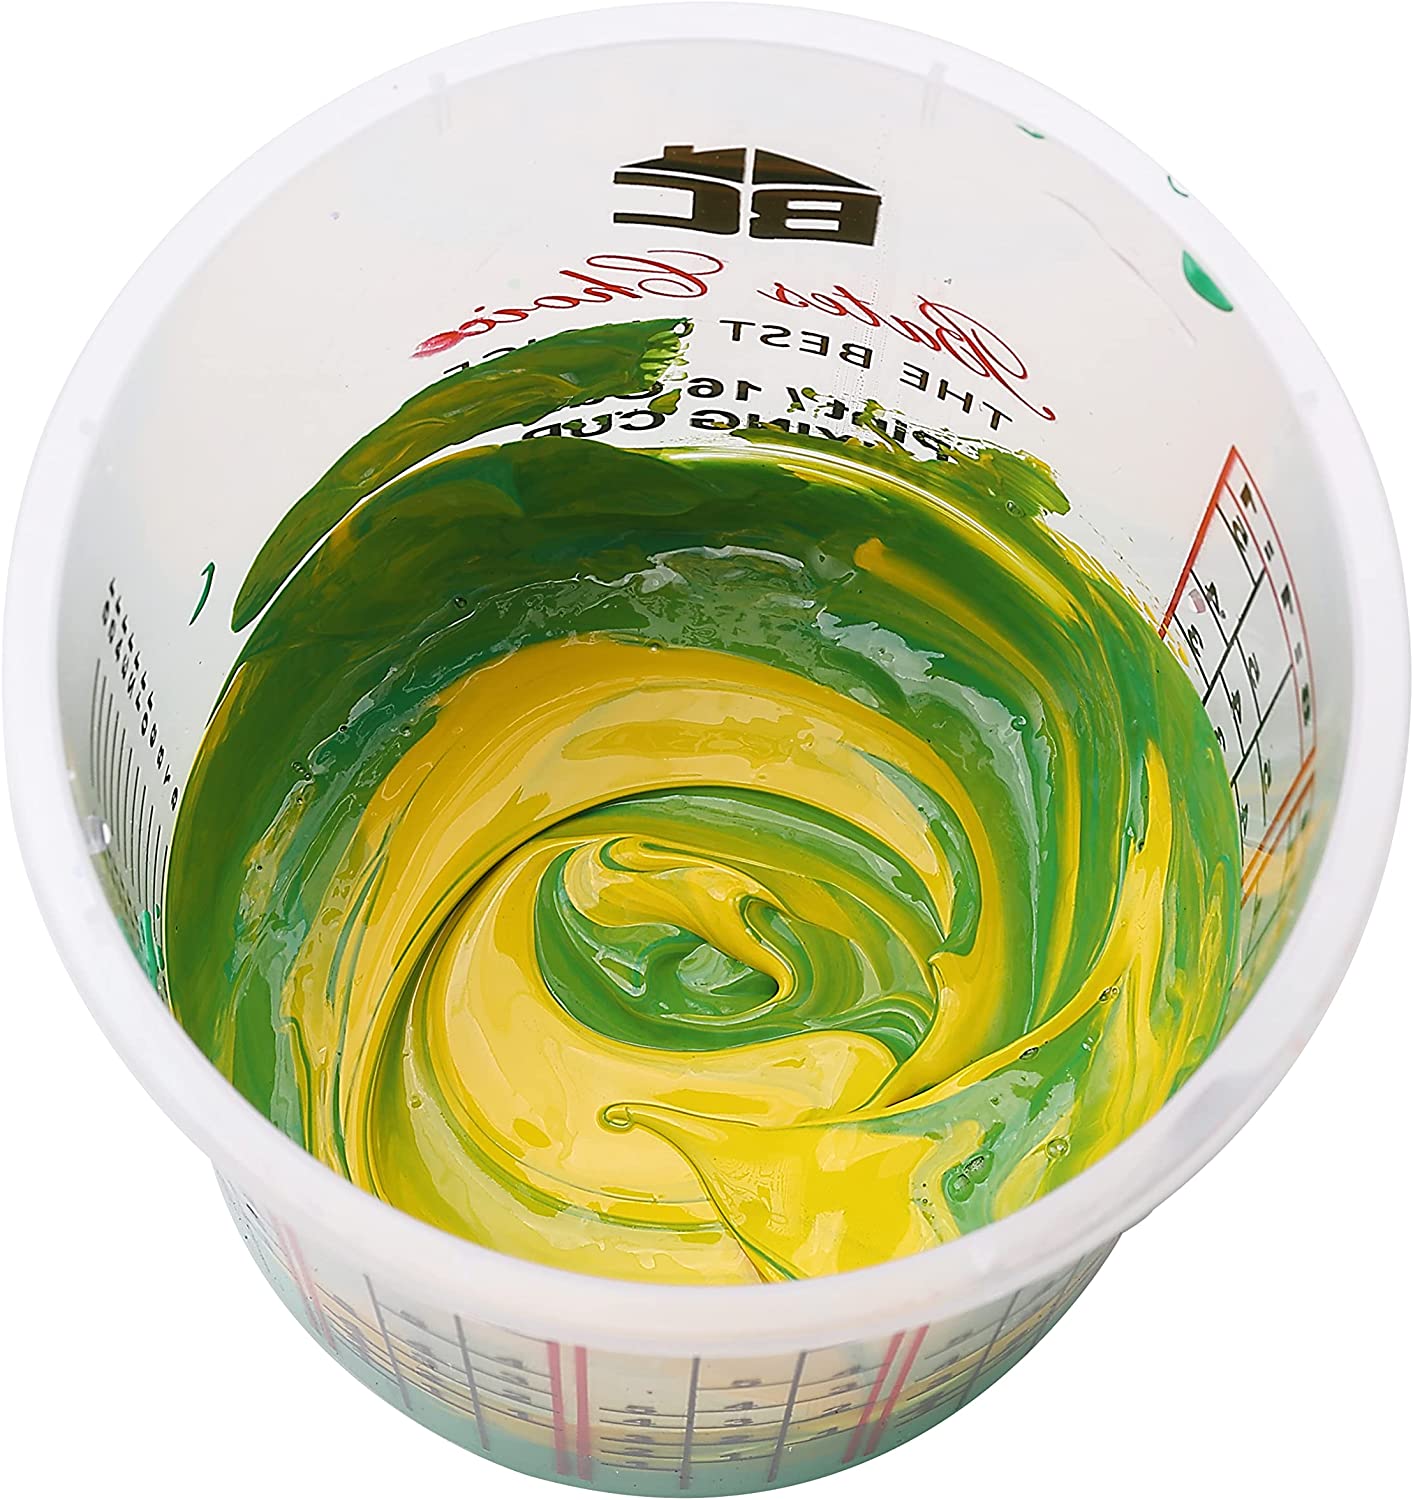 Bates- Paint Mixing Cup,16 oz ,12 Cups, Resin Mixing Cups - Bates Choice